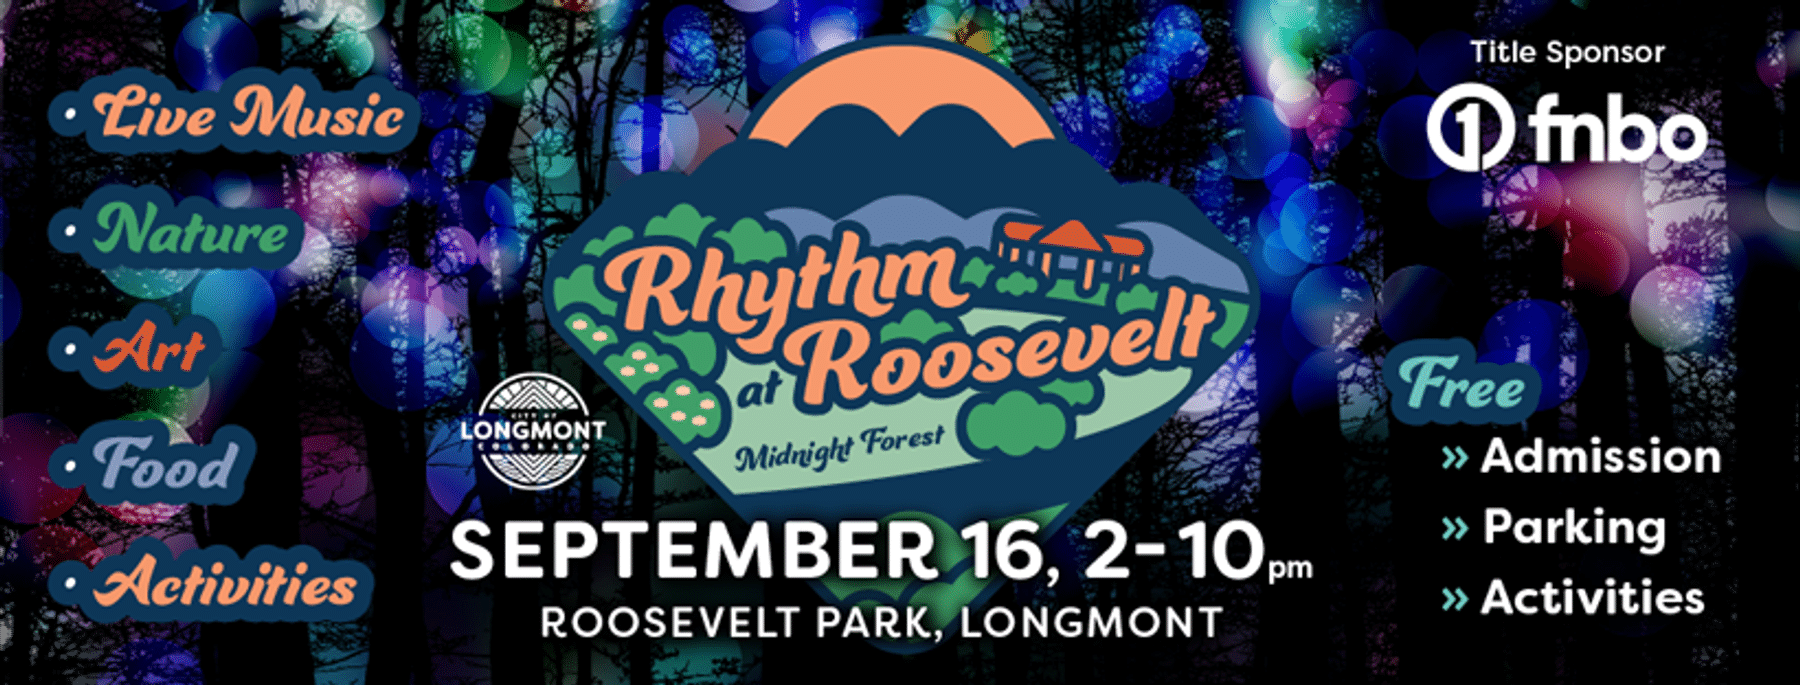 LAW - Rhythm at Roosevelt